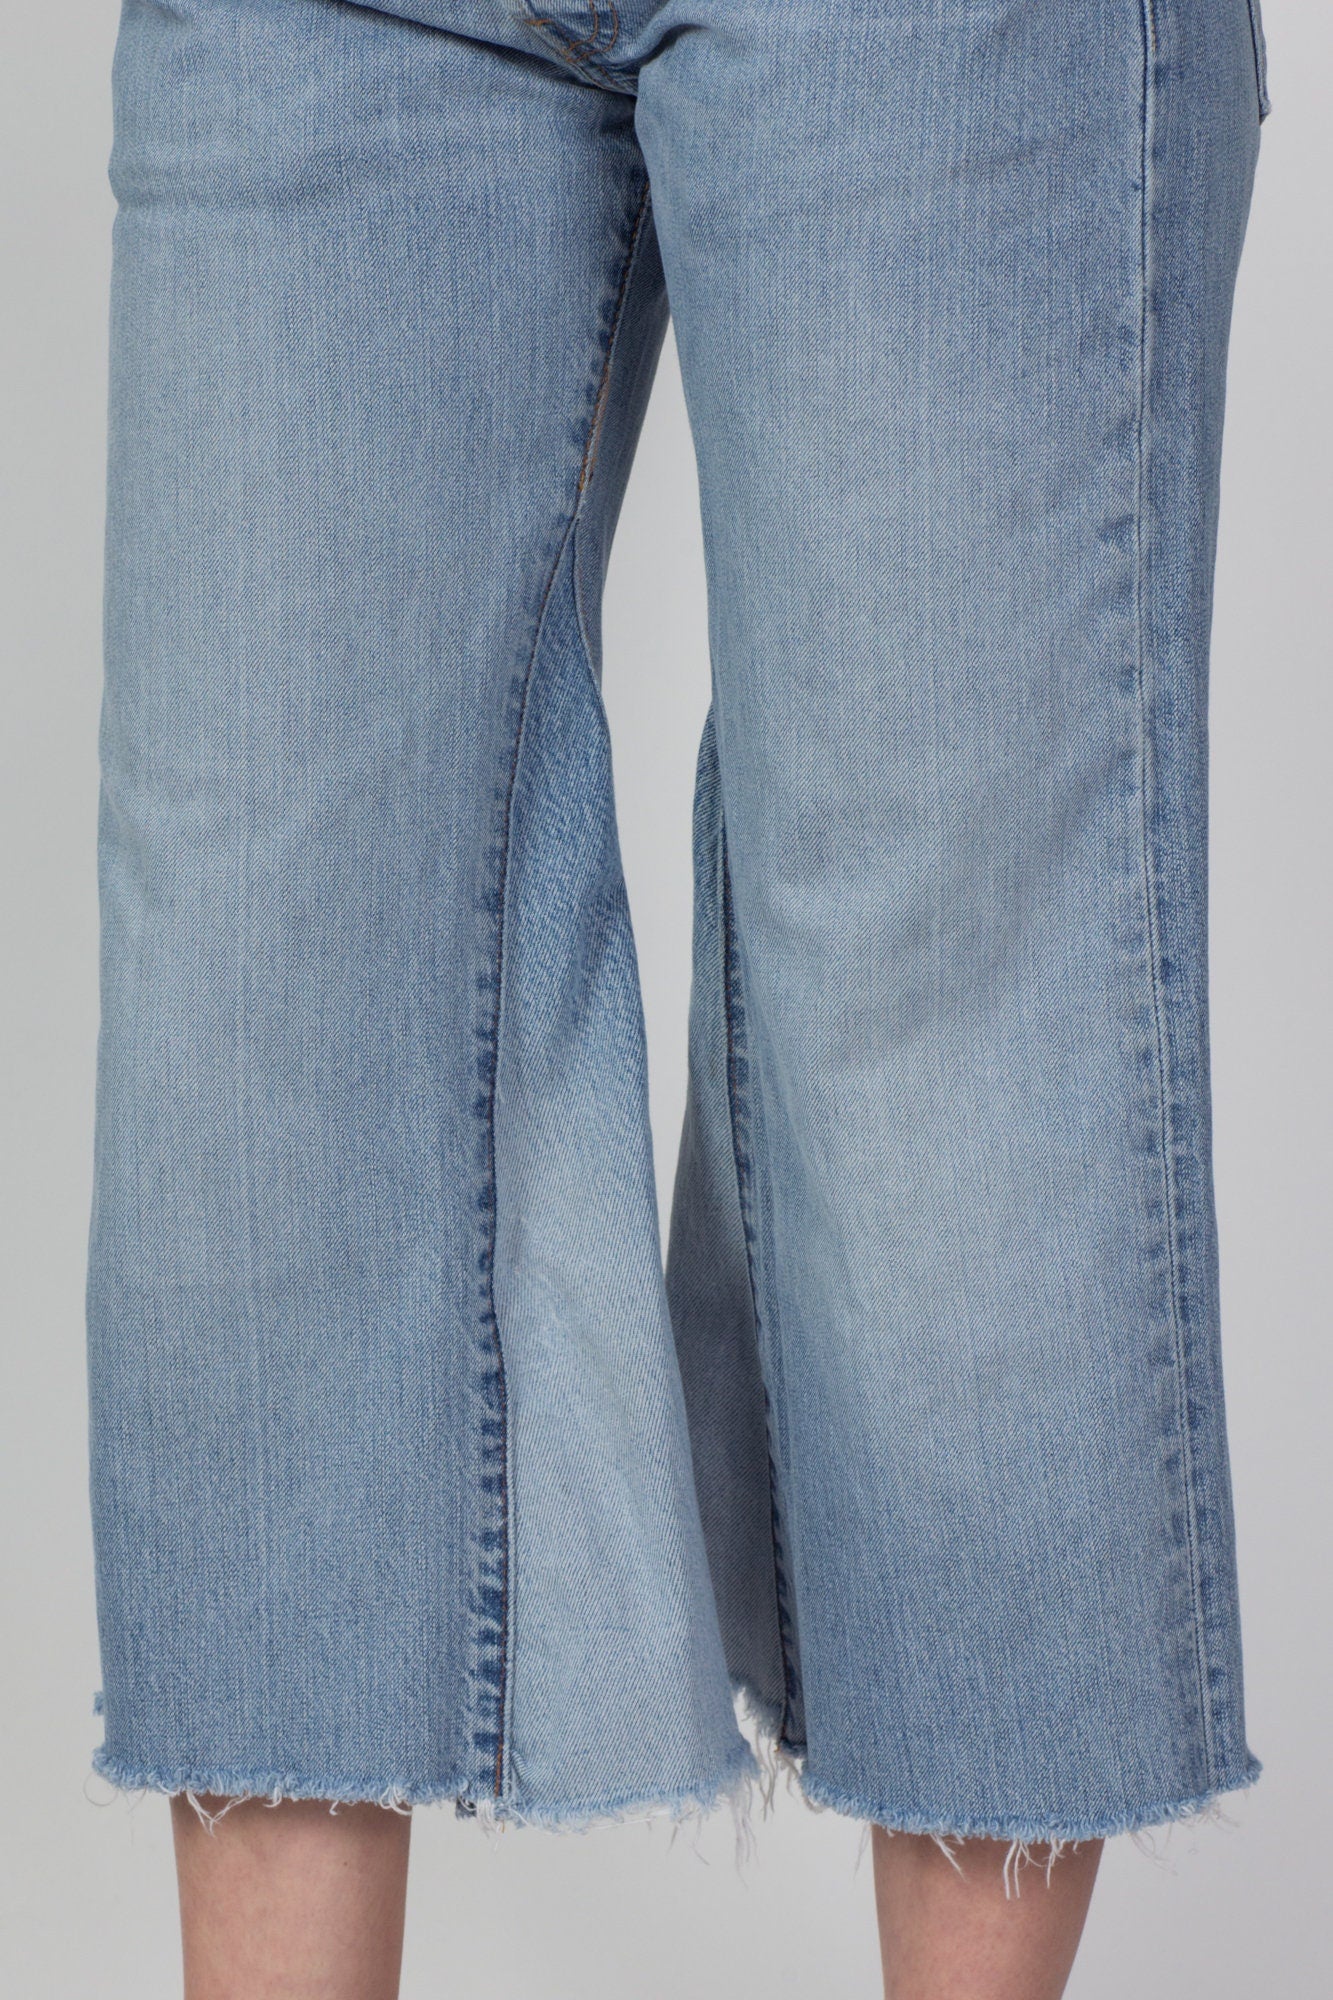 Vintage 90s Reworked Levi's 501 Capri Jeans - Medium 